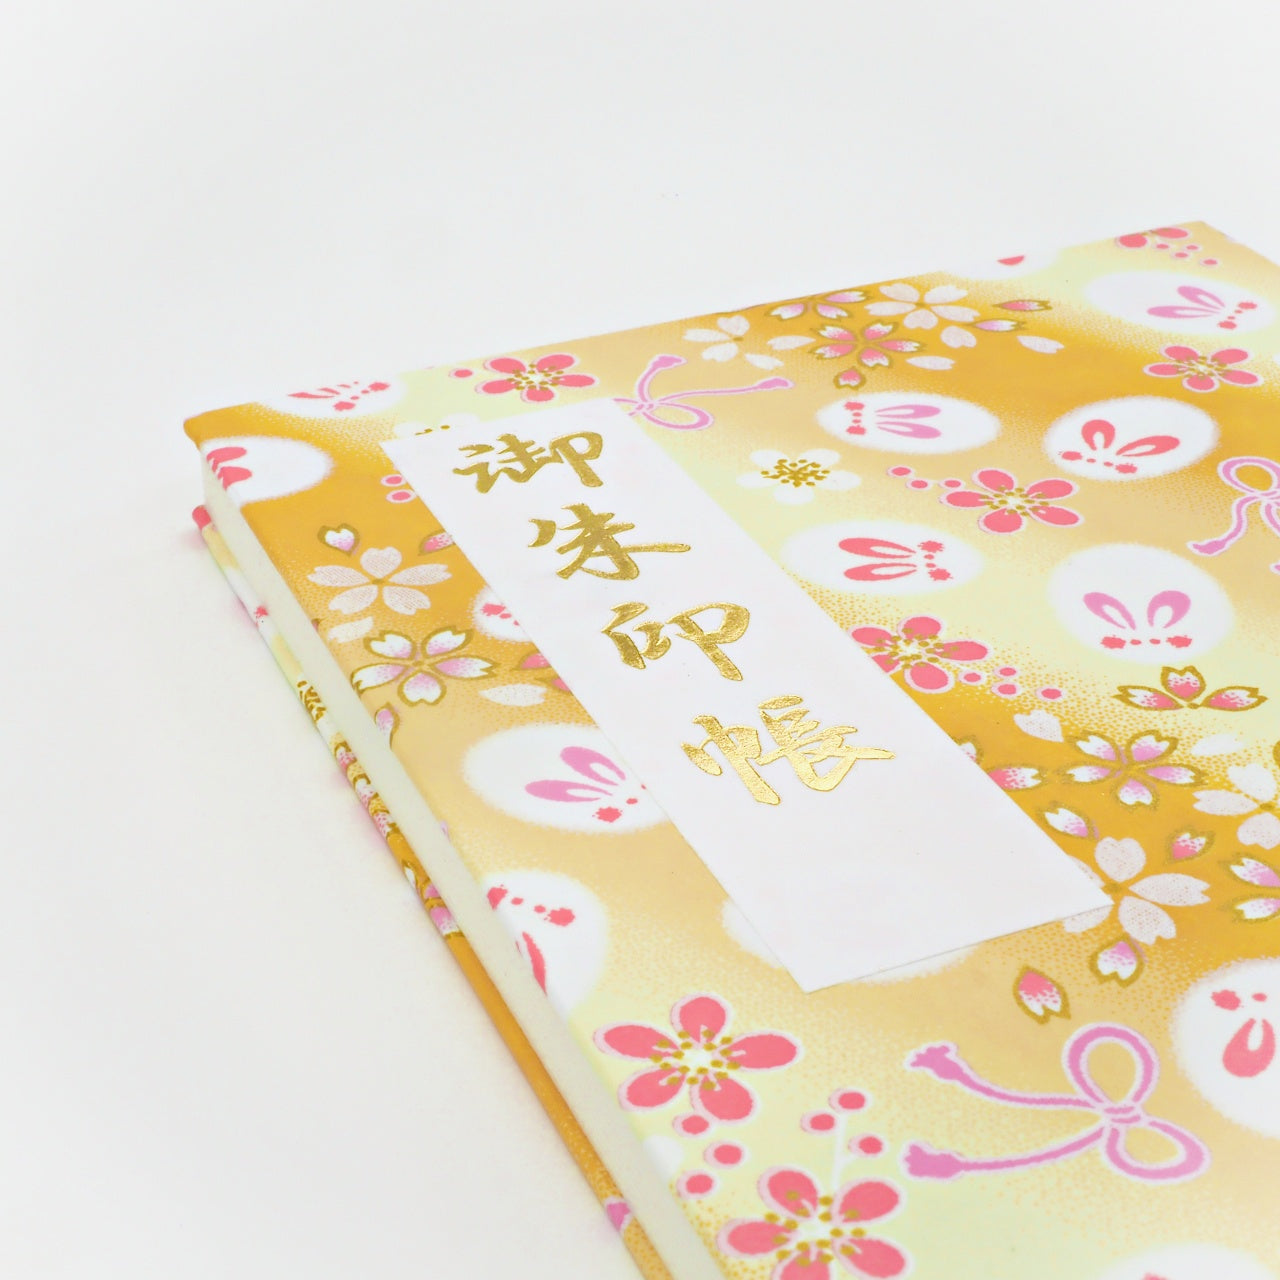 Goshuin book “Kiyora” Snow Rabbit/Yuzu Yukito